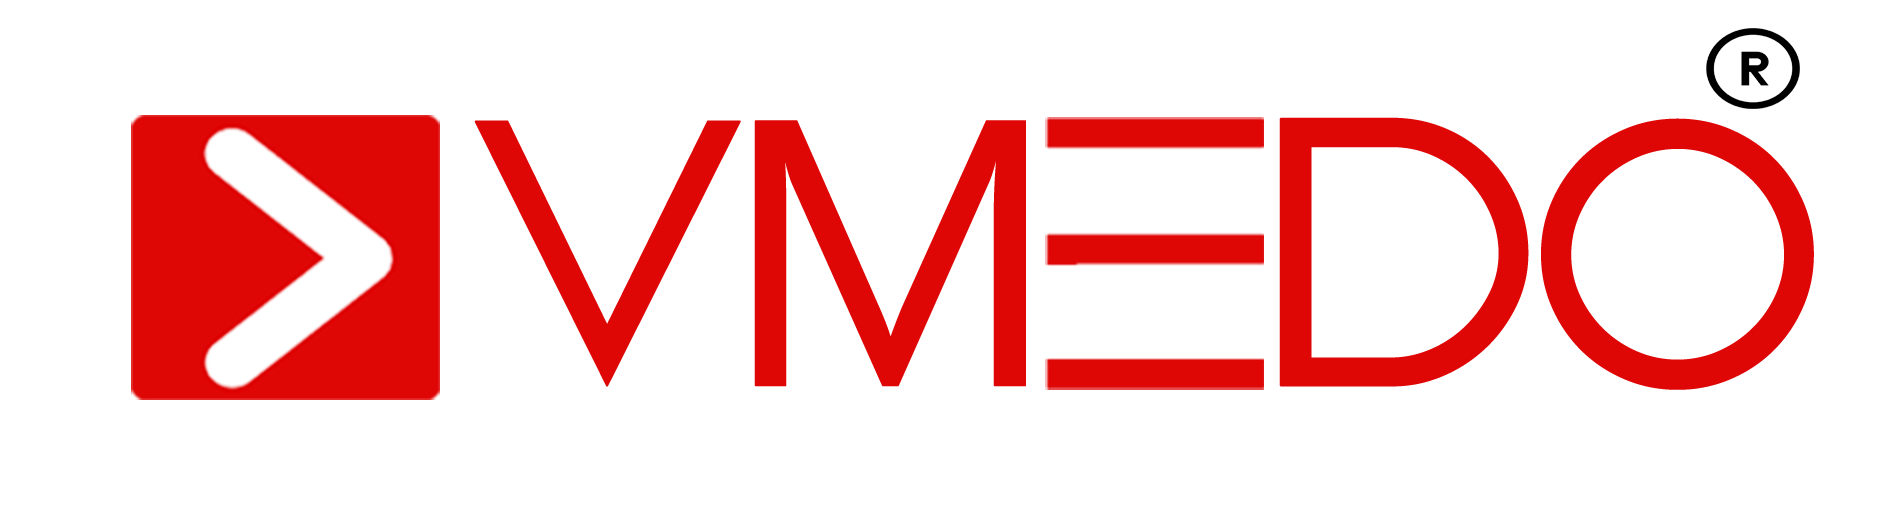 vmedo-brand-logo